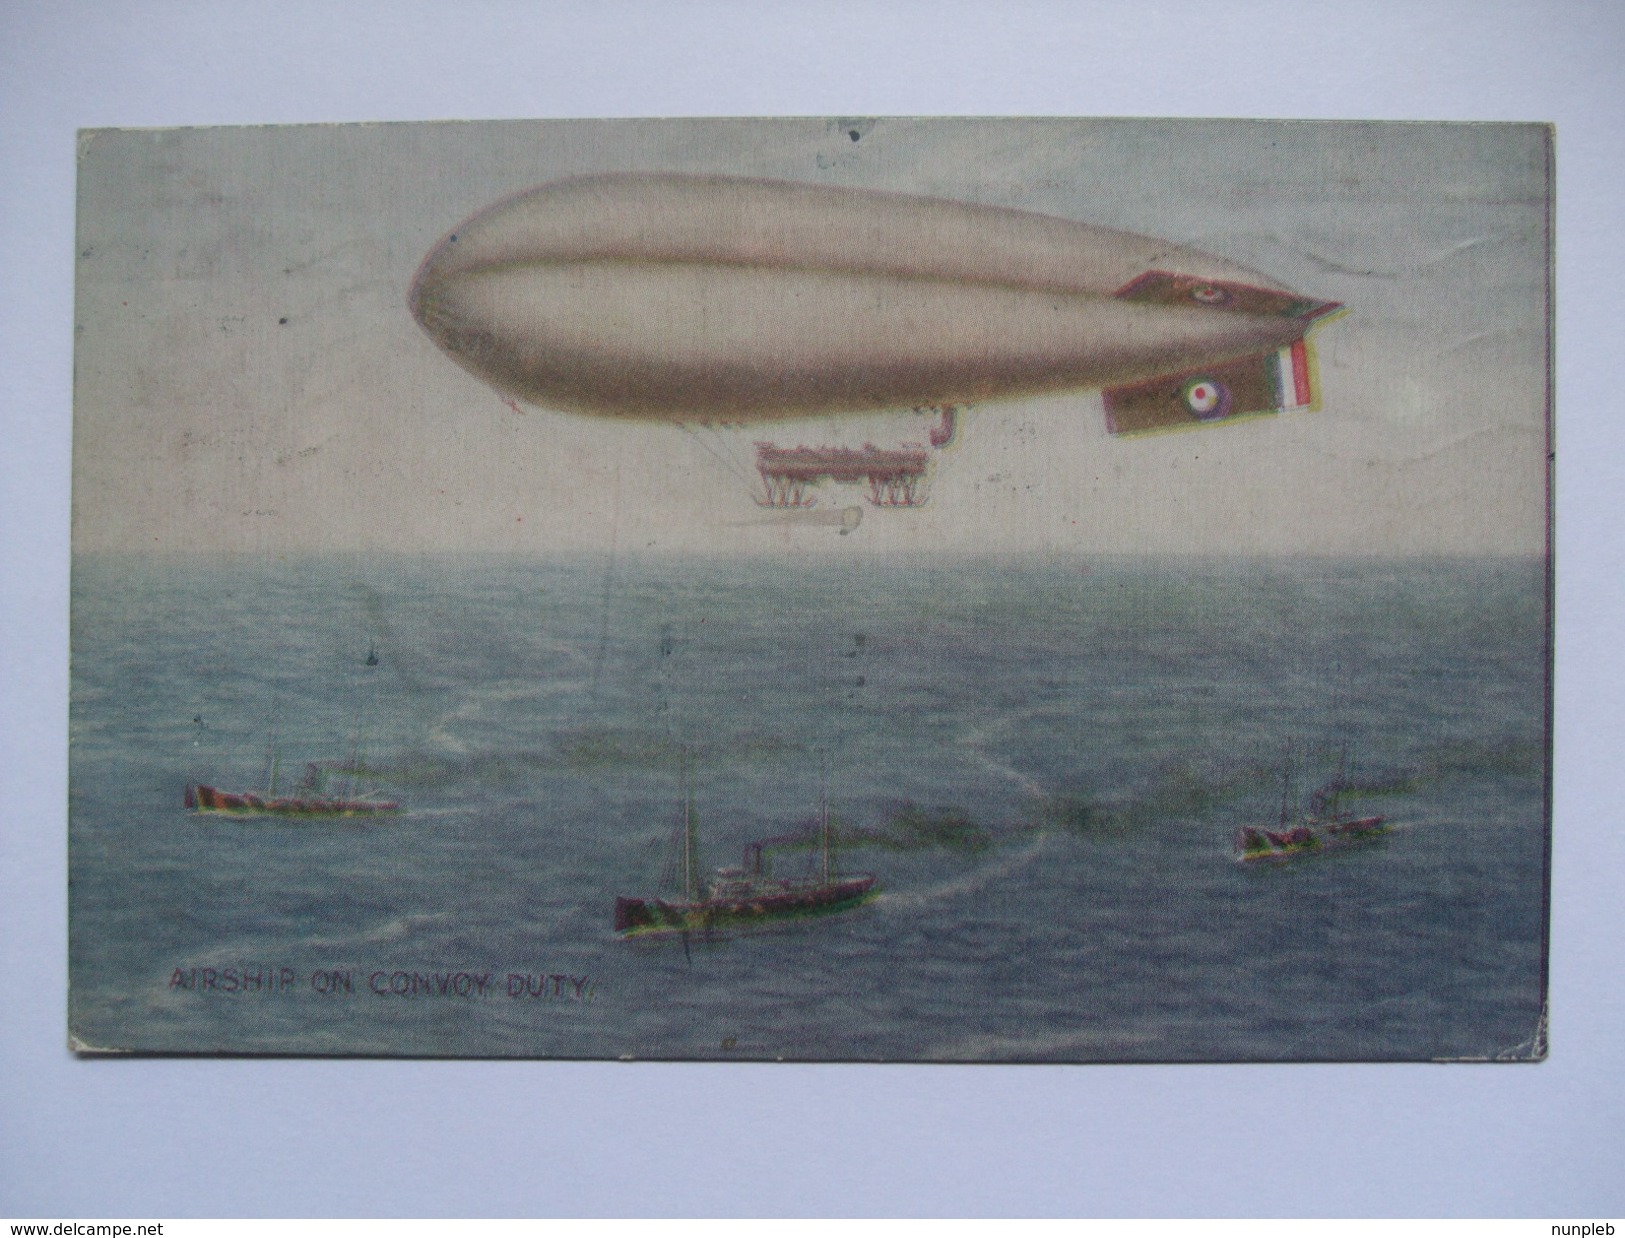 RNAS Coastal Airship On Convoy Duty, WW1. War Bond Campaign Series No.6. 1917 - Dirigeables